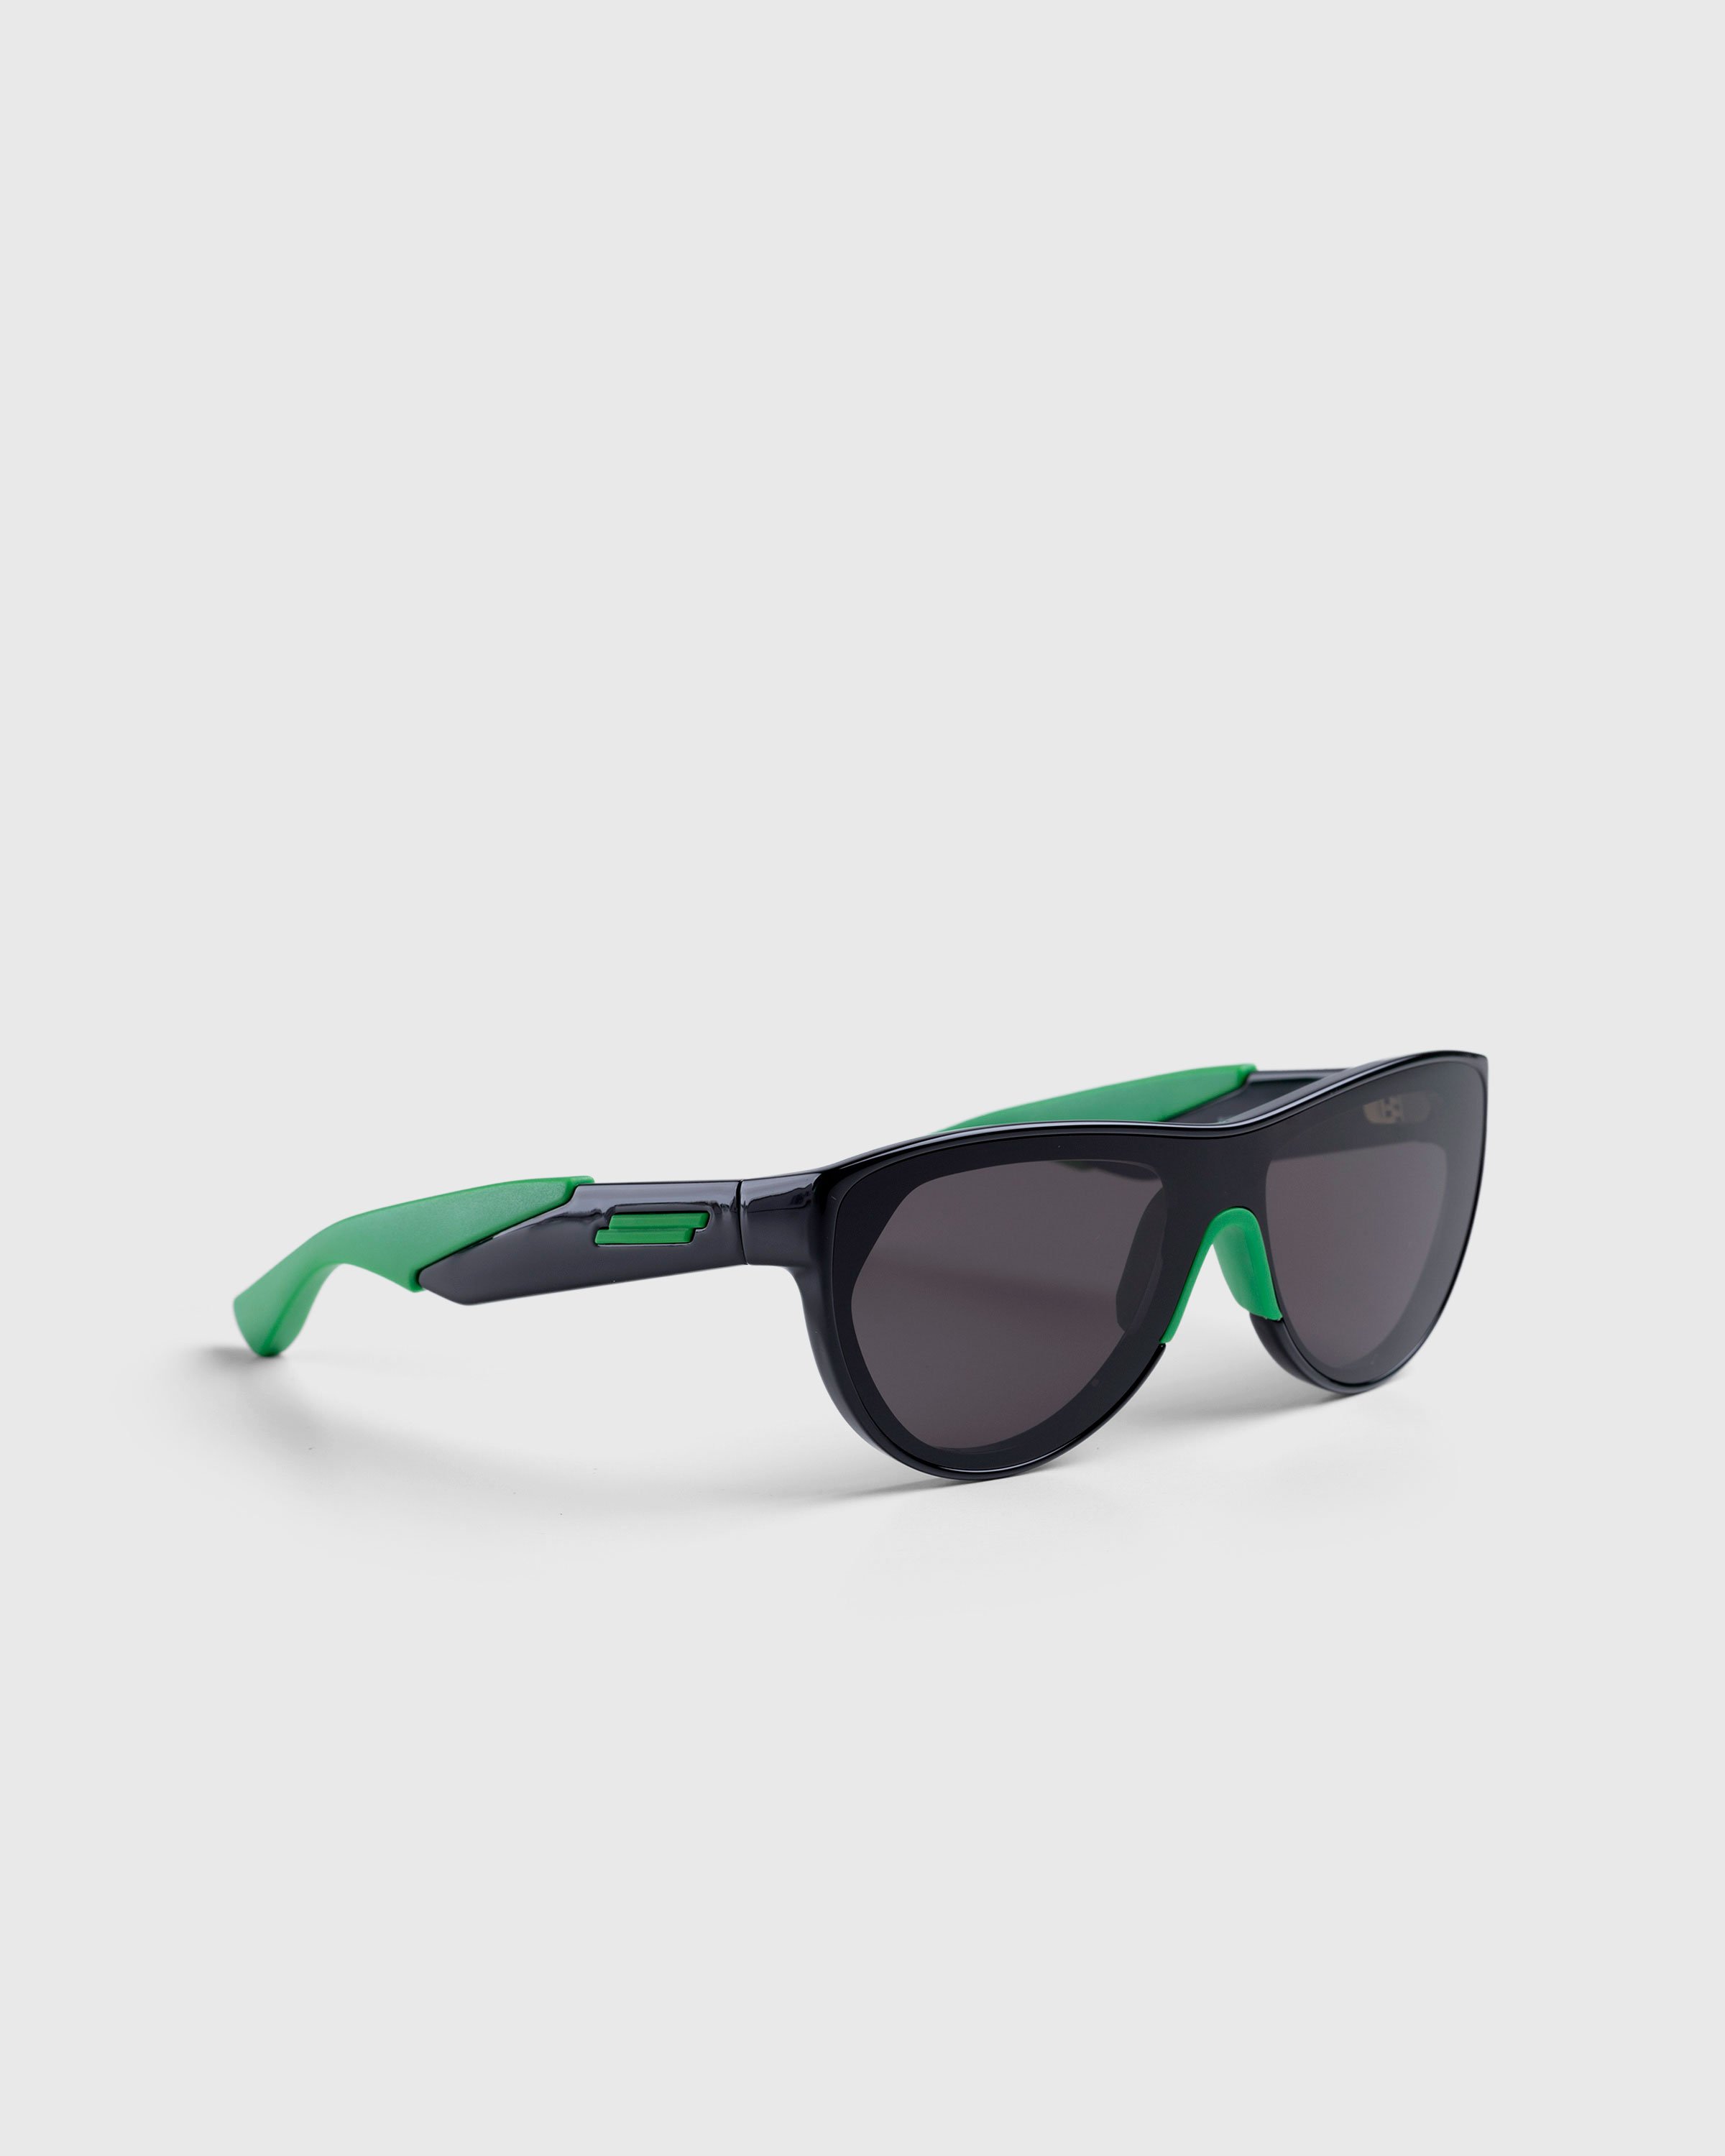 Bottega Veneta - Mitre Square Rounded Injected Acetate Sunglasses Black/Green - Accessories - Black - Image 2